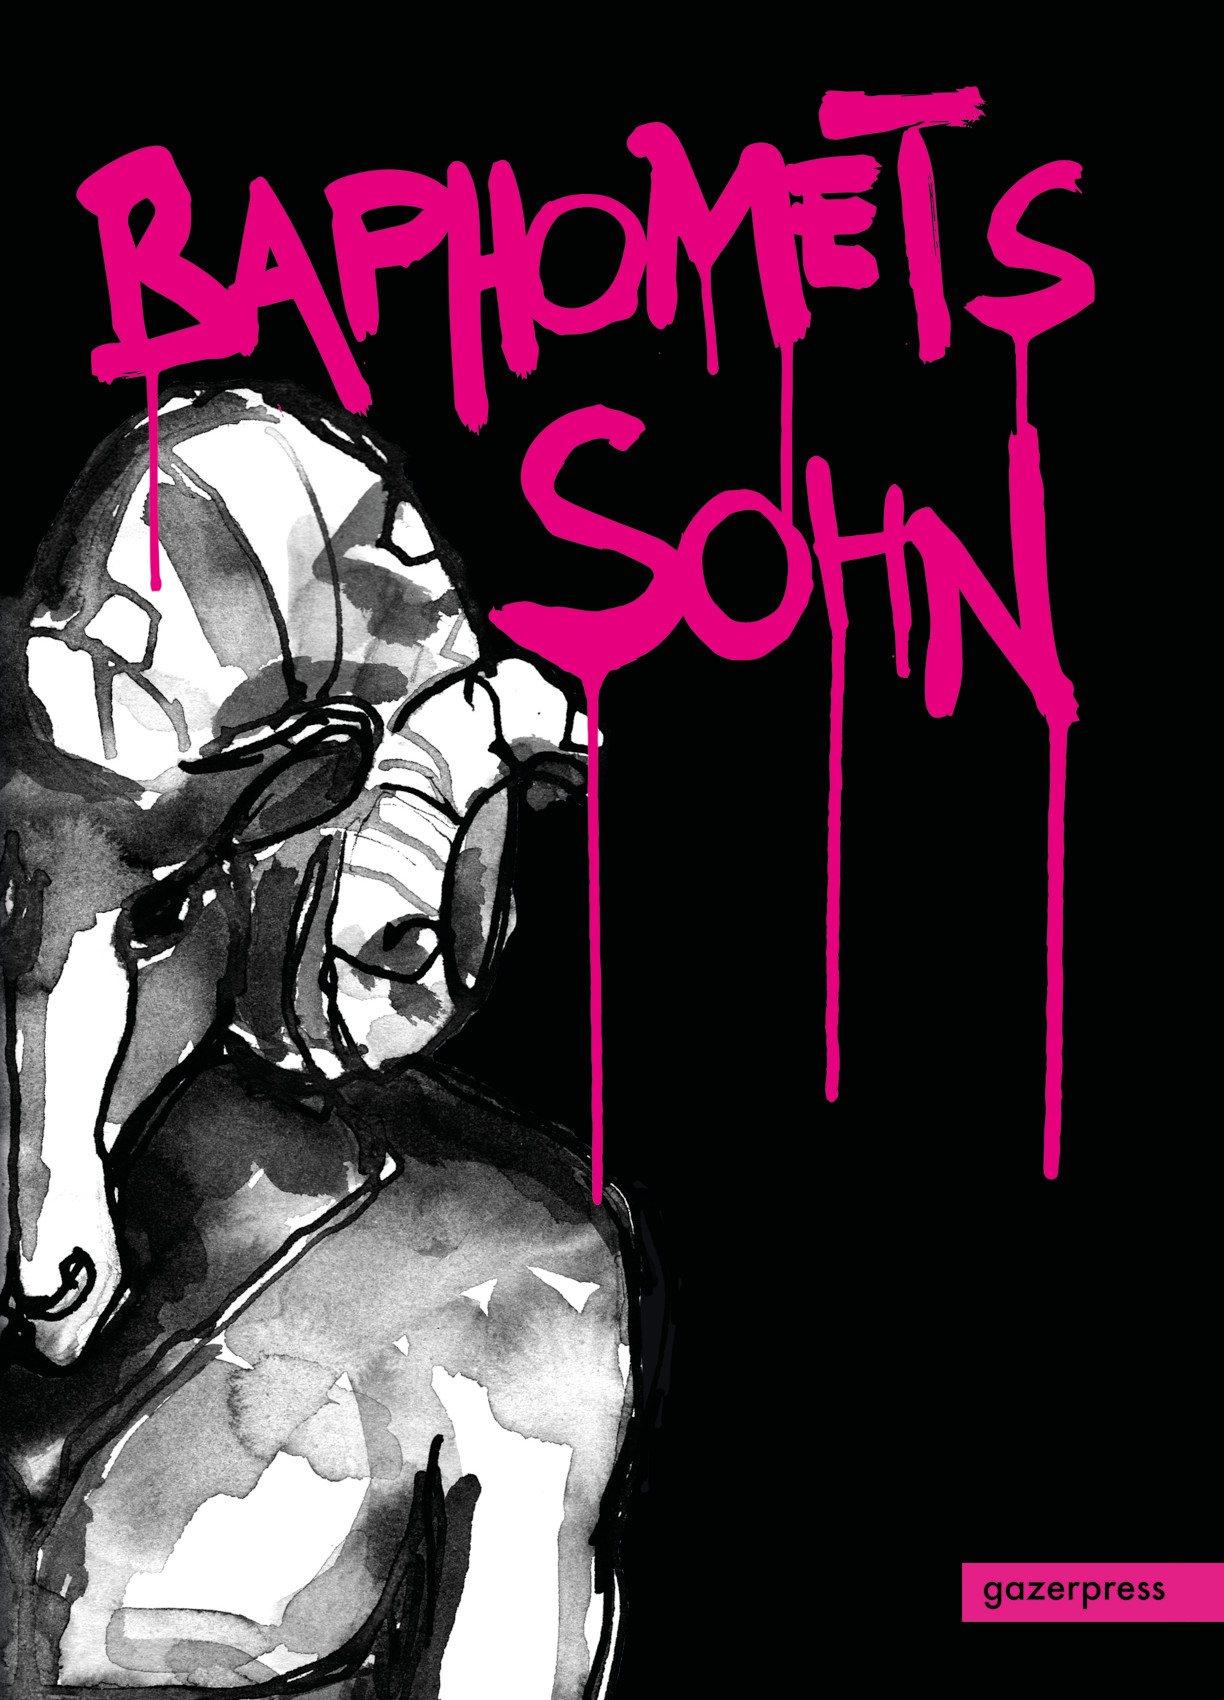 Baphomets Sohn, book